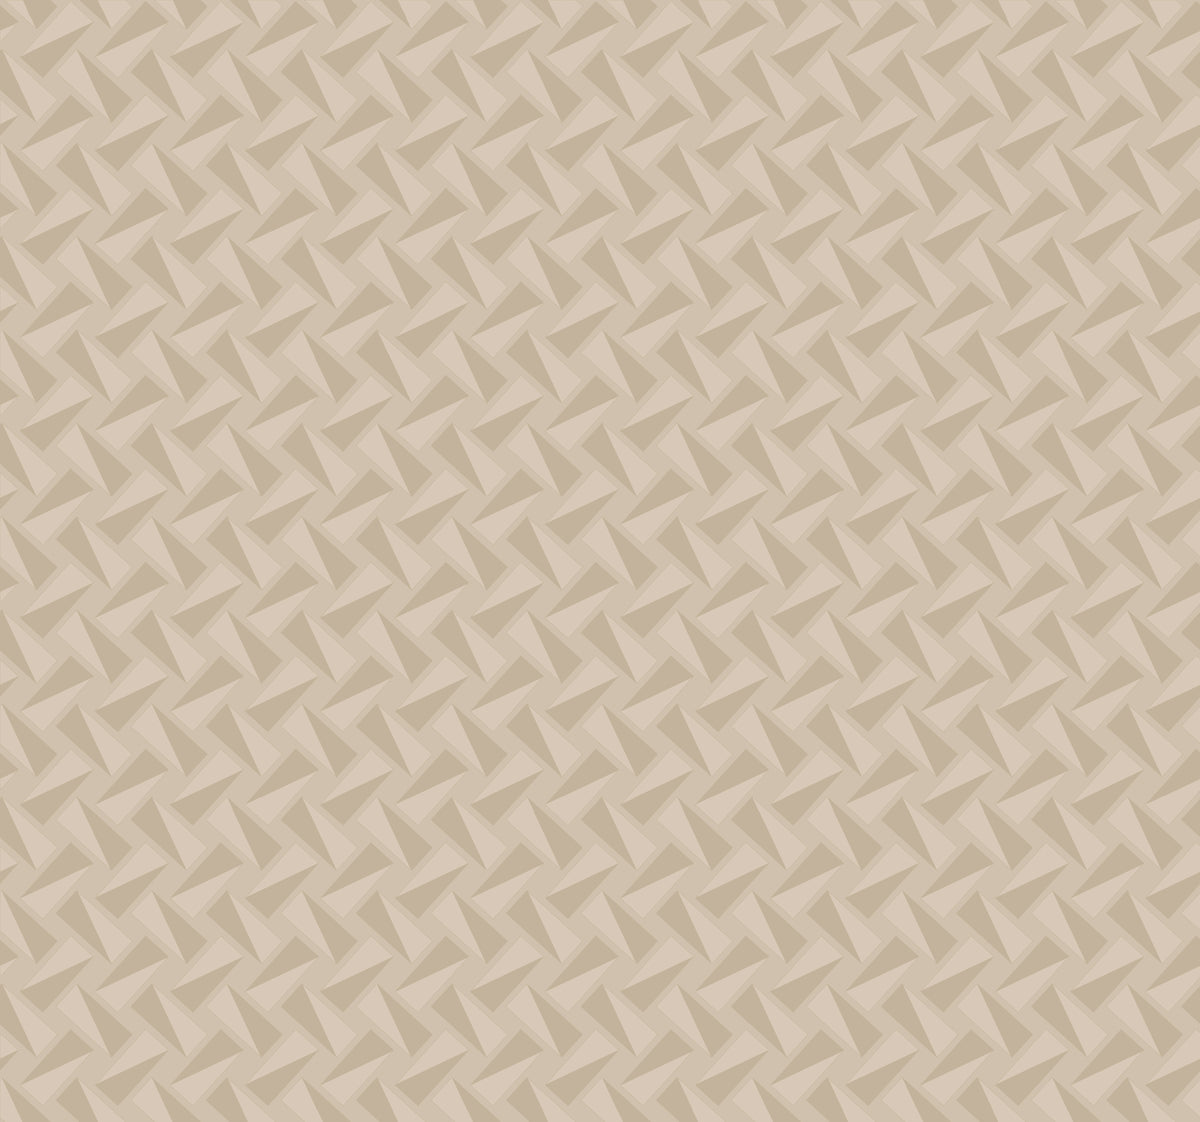 Petite Pivots Geometric Wallpaper - Sand